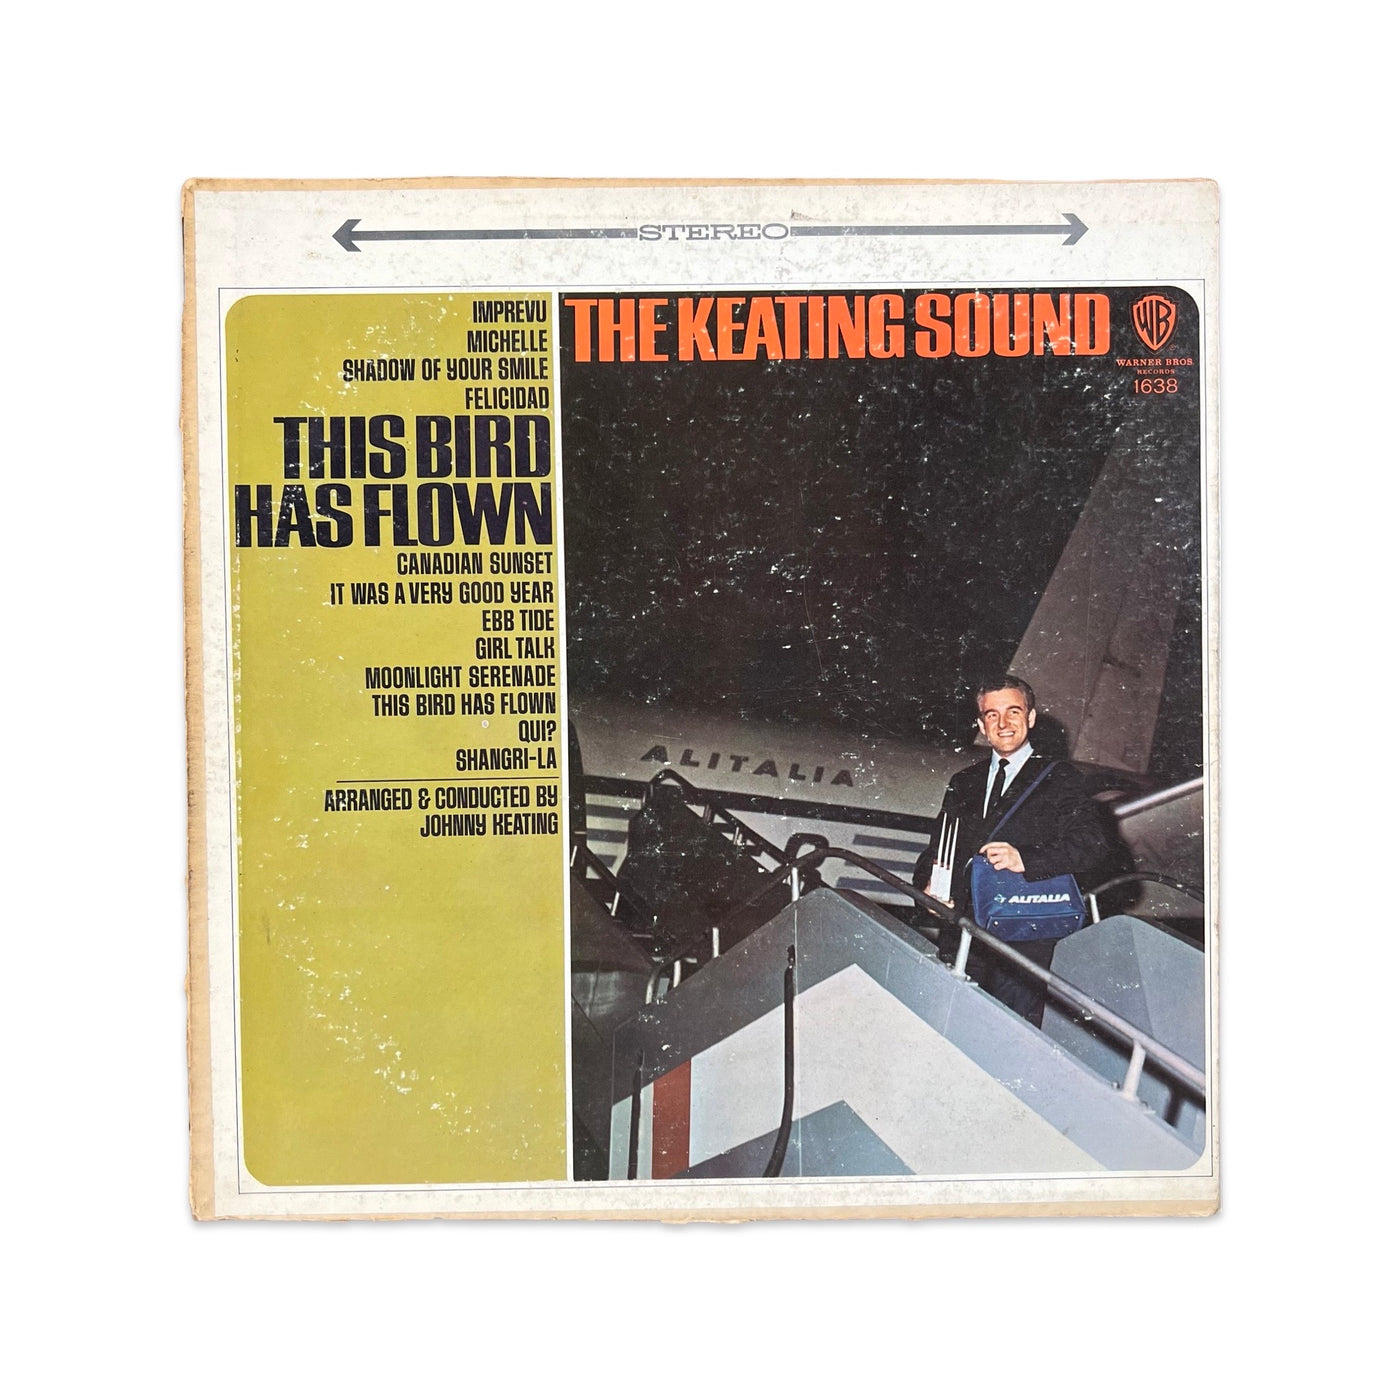 The Keating Sound - This Bird Has Flown